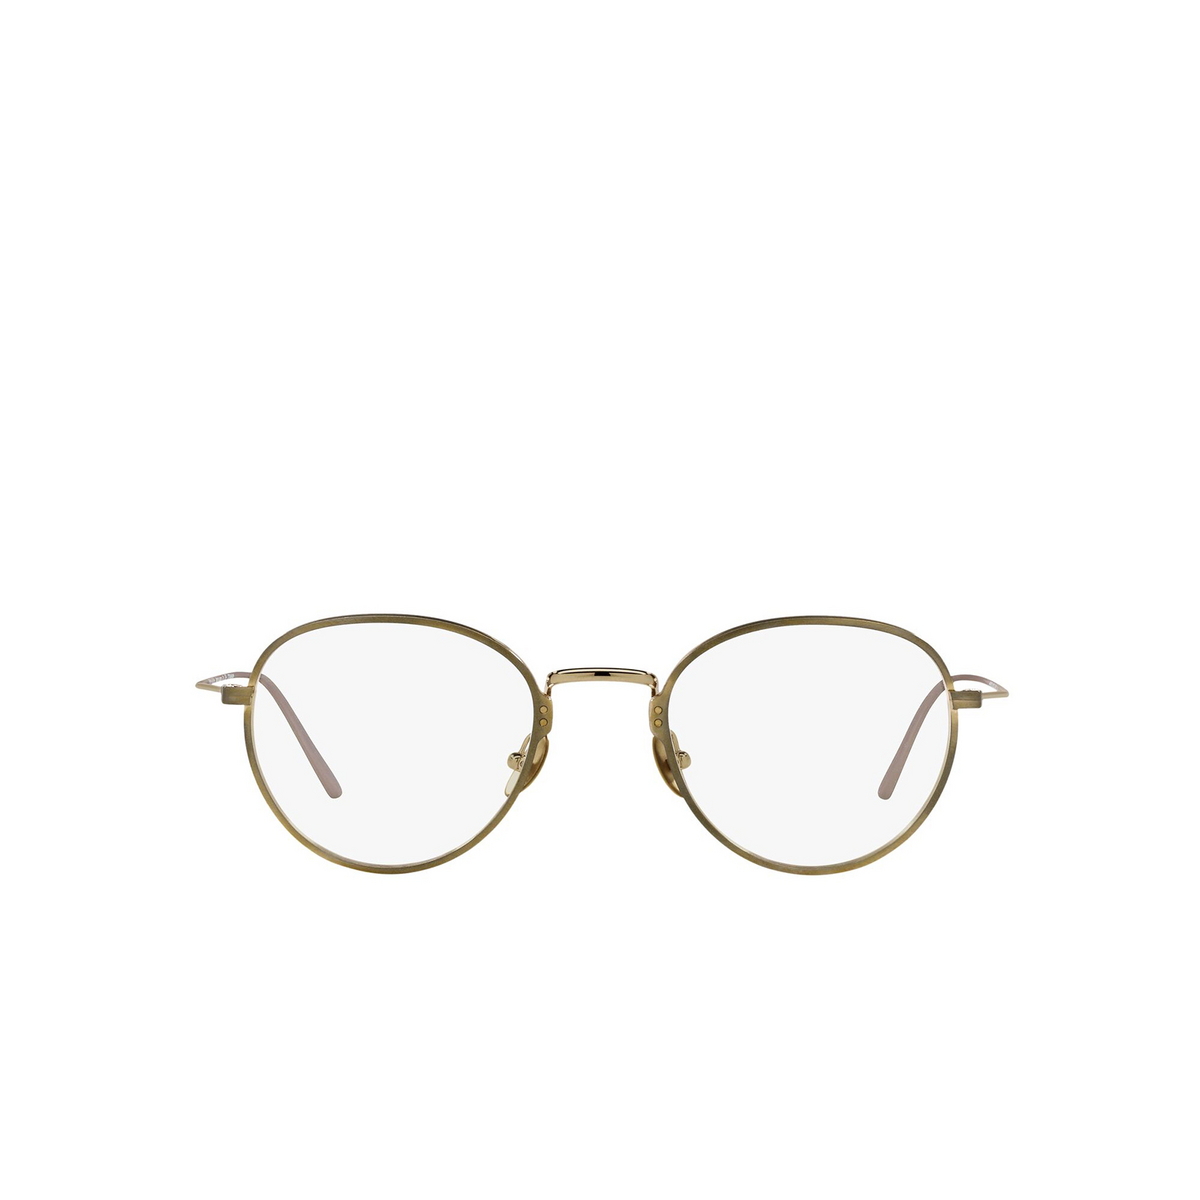 Prada® Oval Eyeglasses: PR 50YV color Satin Pale Gold 06Q1O1 - front view.